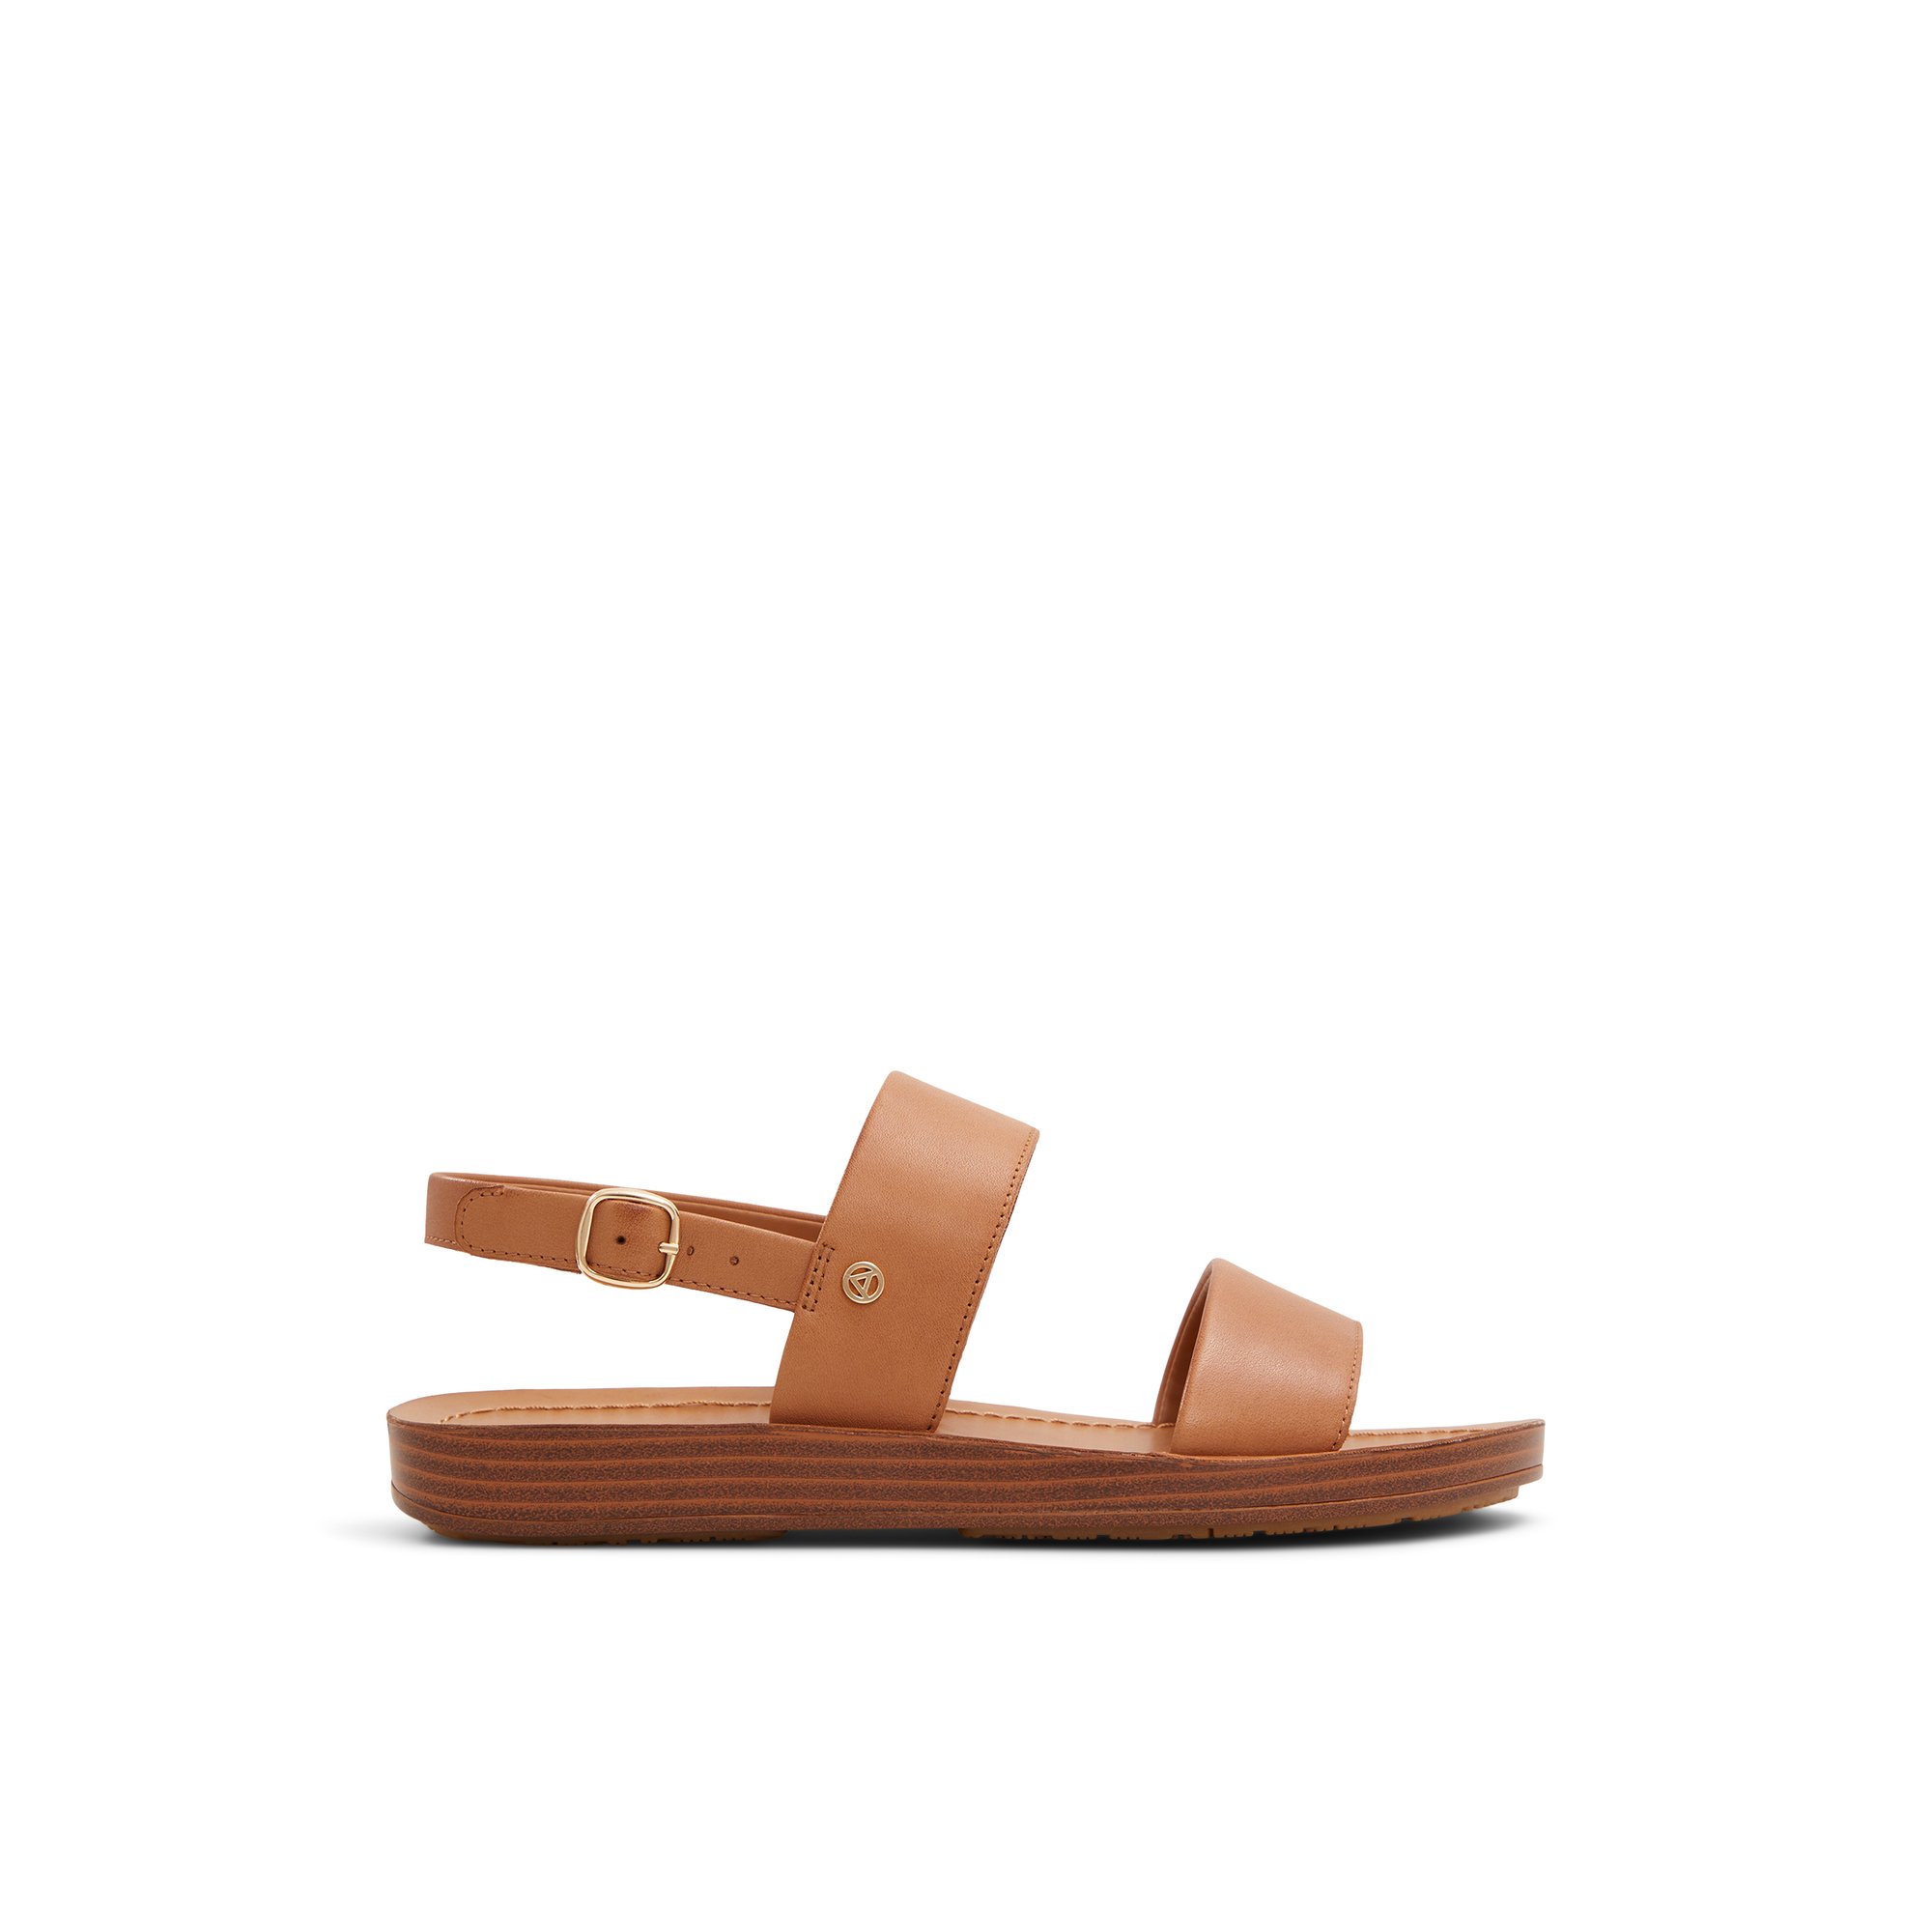 ALDO Bamaever - Women's Sandals Flats - Beige